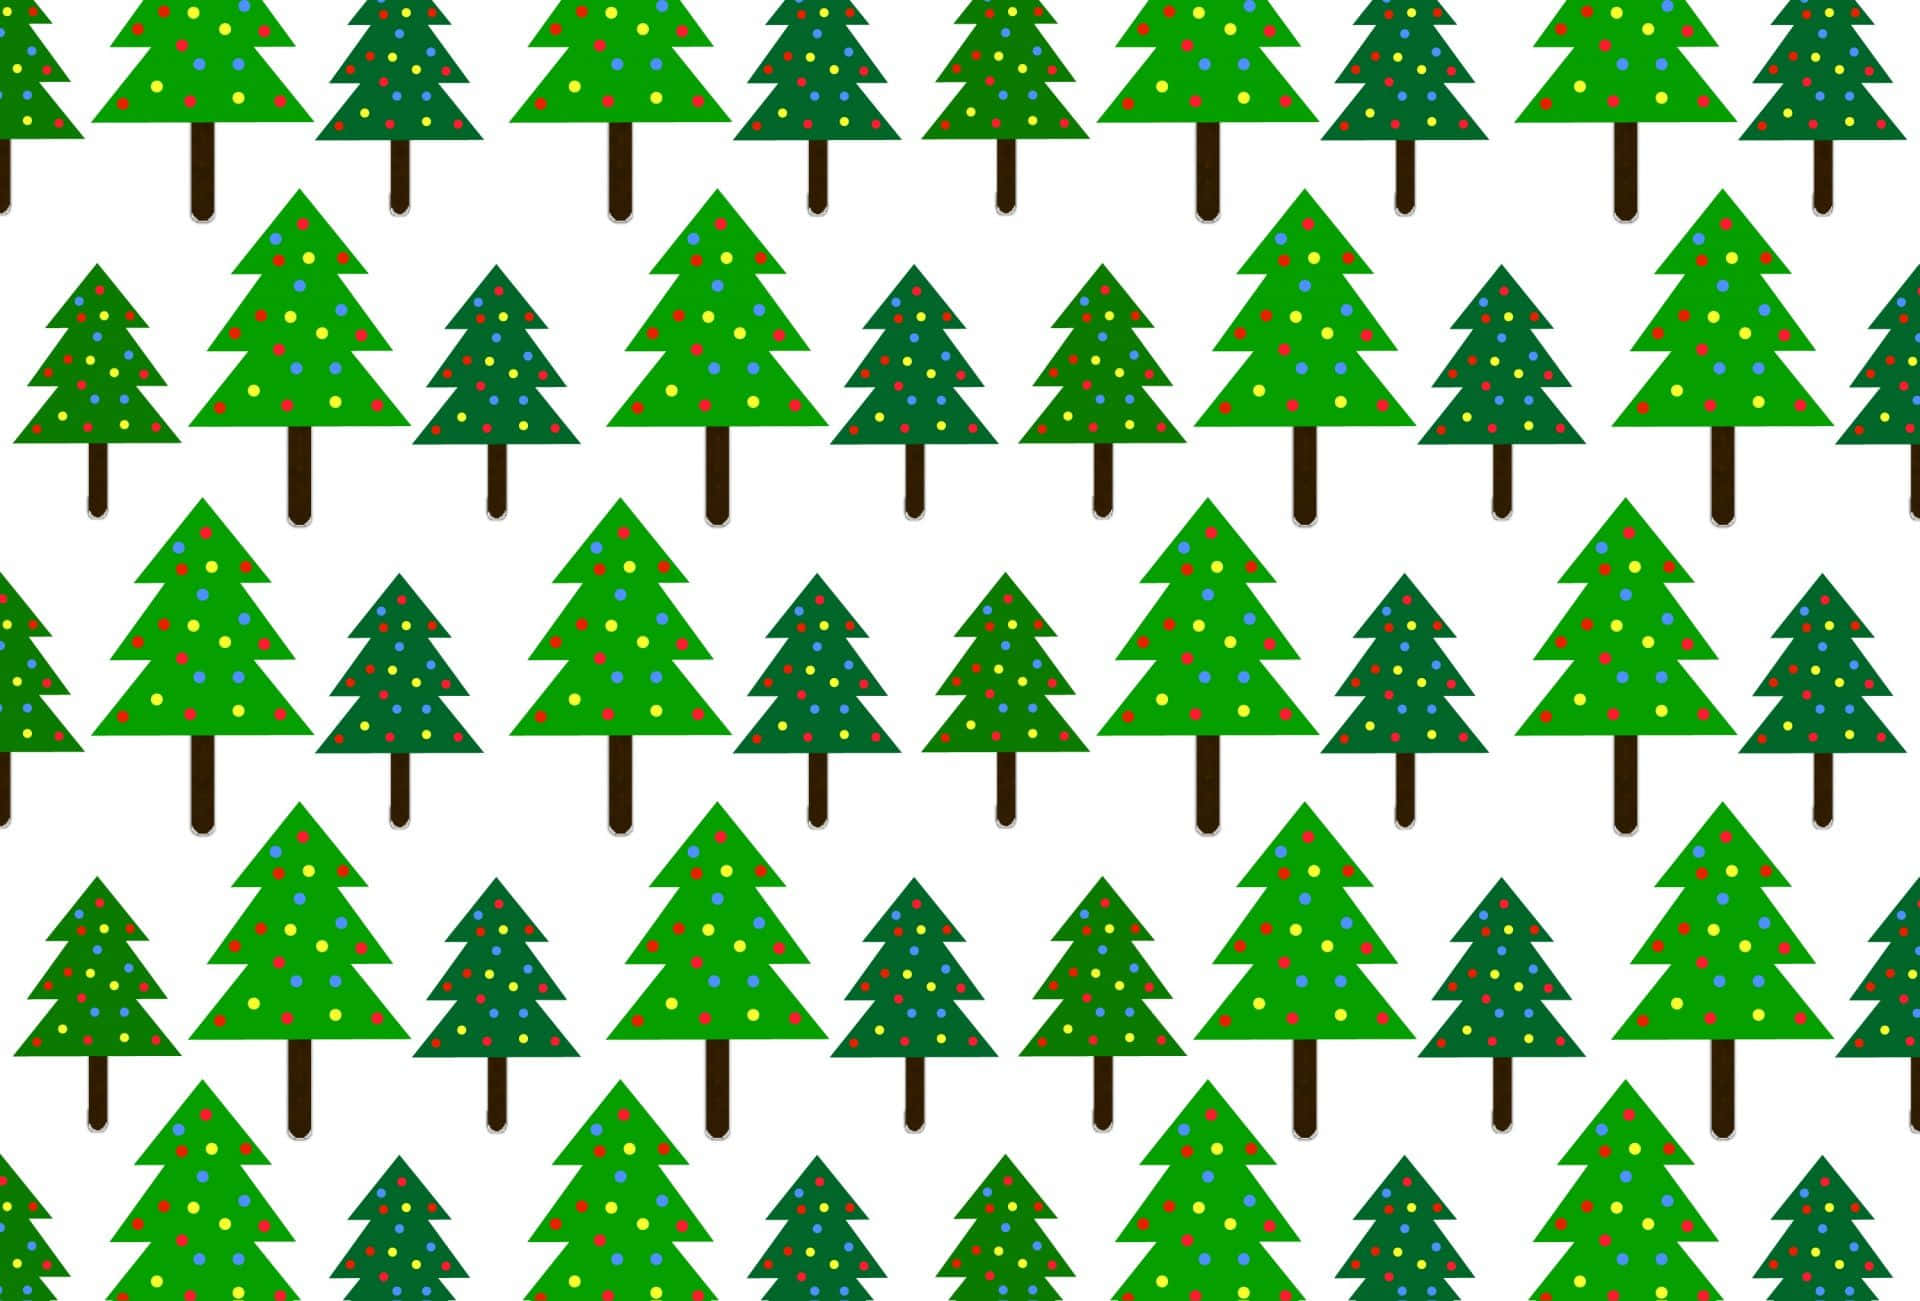 Yuletide Joy: A Festive Christmas Pattern Wallpaper